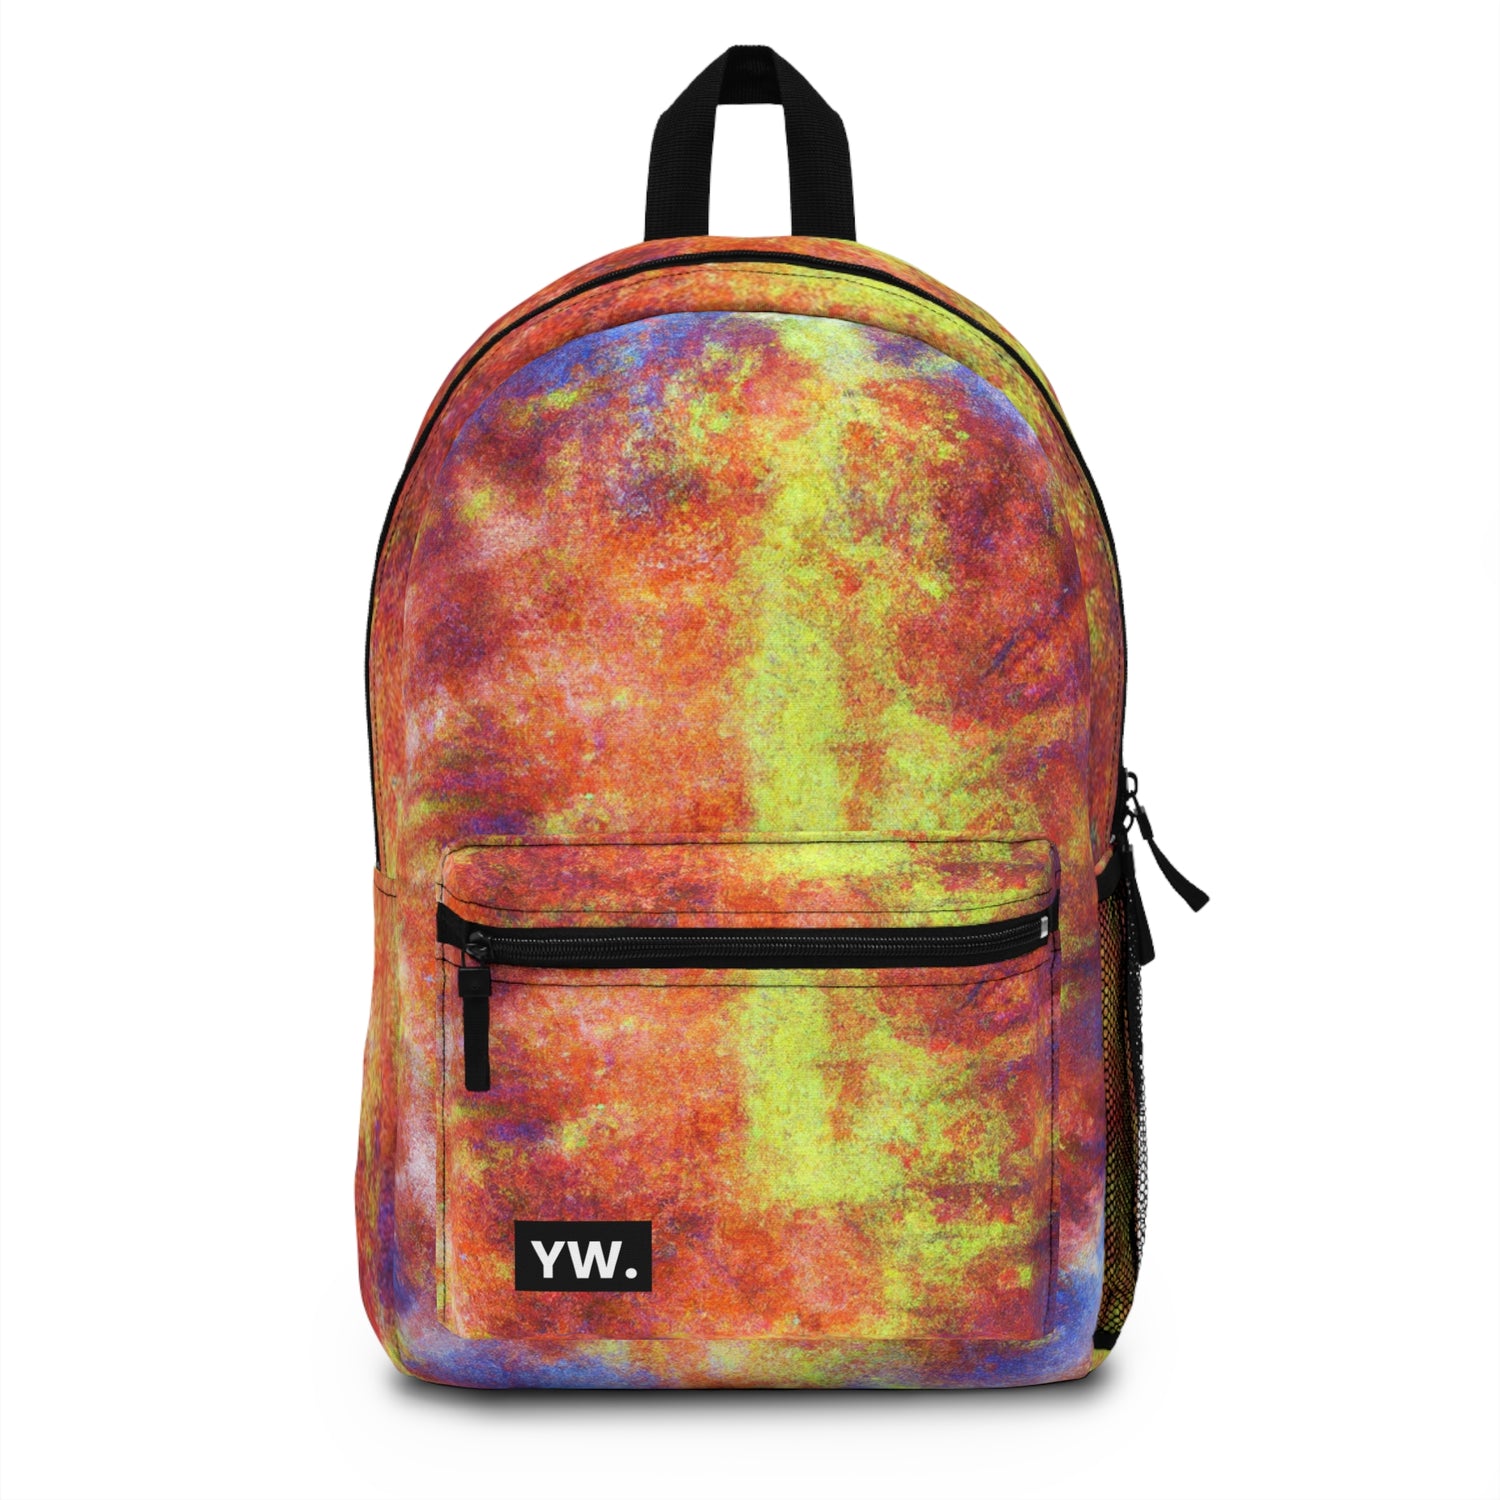 Lunar Spectrum Dreamweaver Backpack